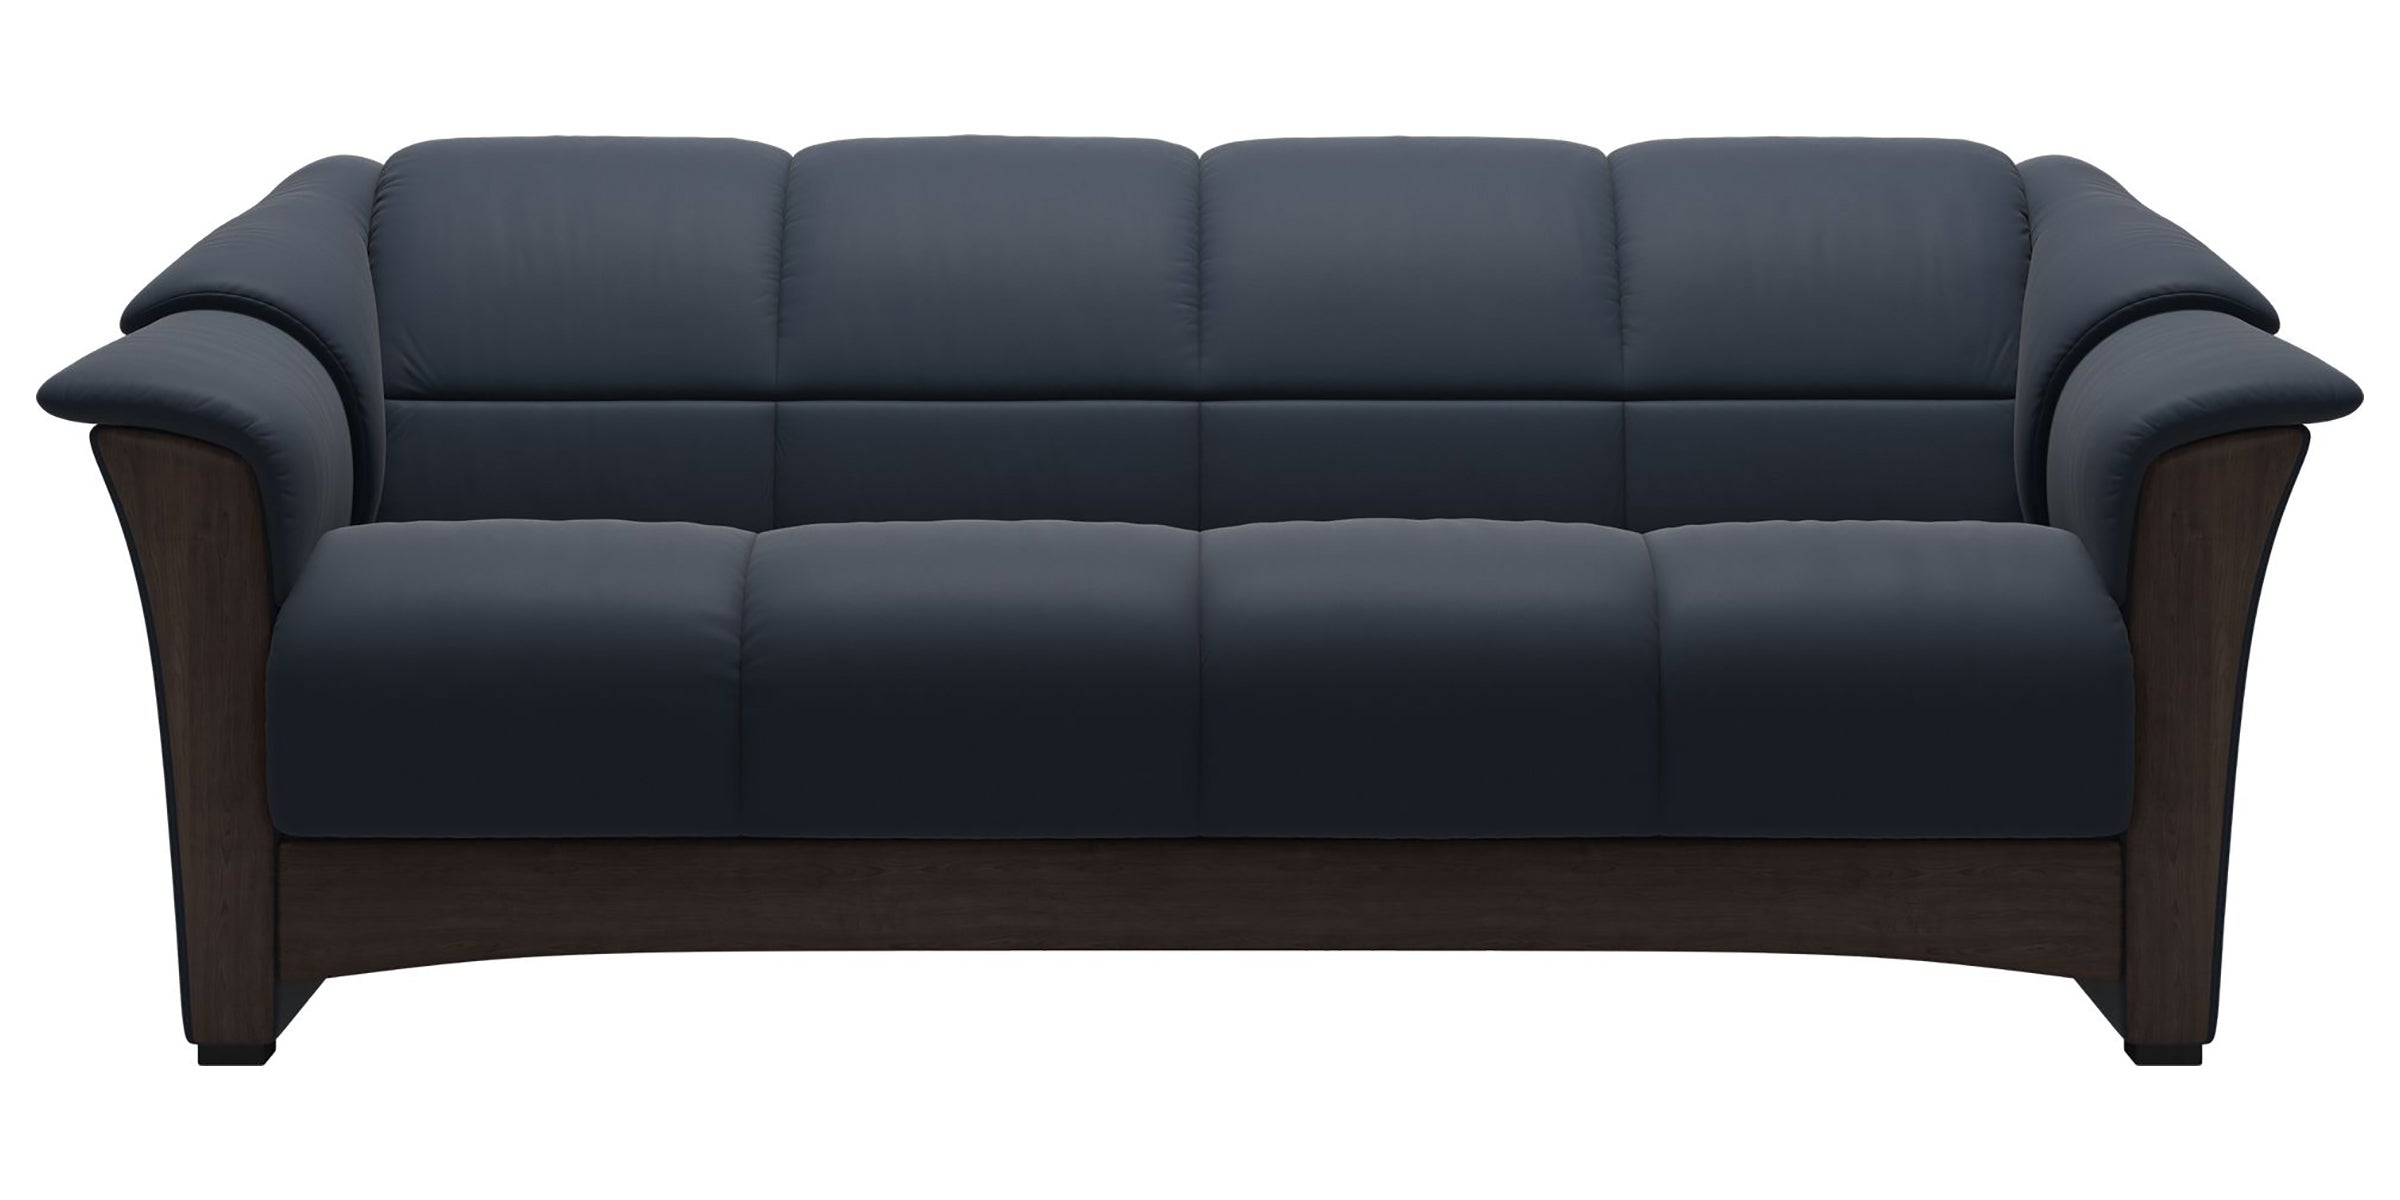 Paloma Leather Oxford Blue and Wenge Base | Stressless Oslo Sofa | Valley Ridge Furniture